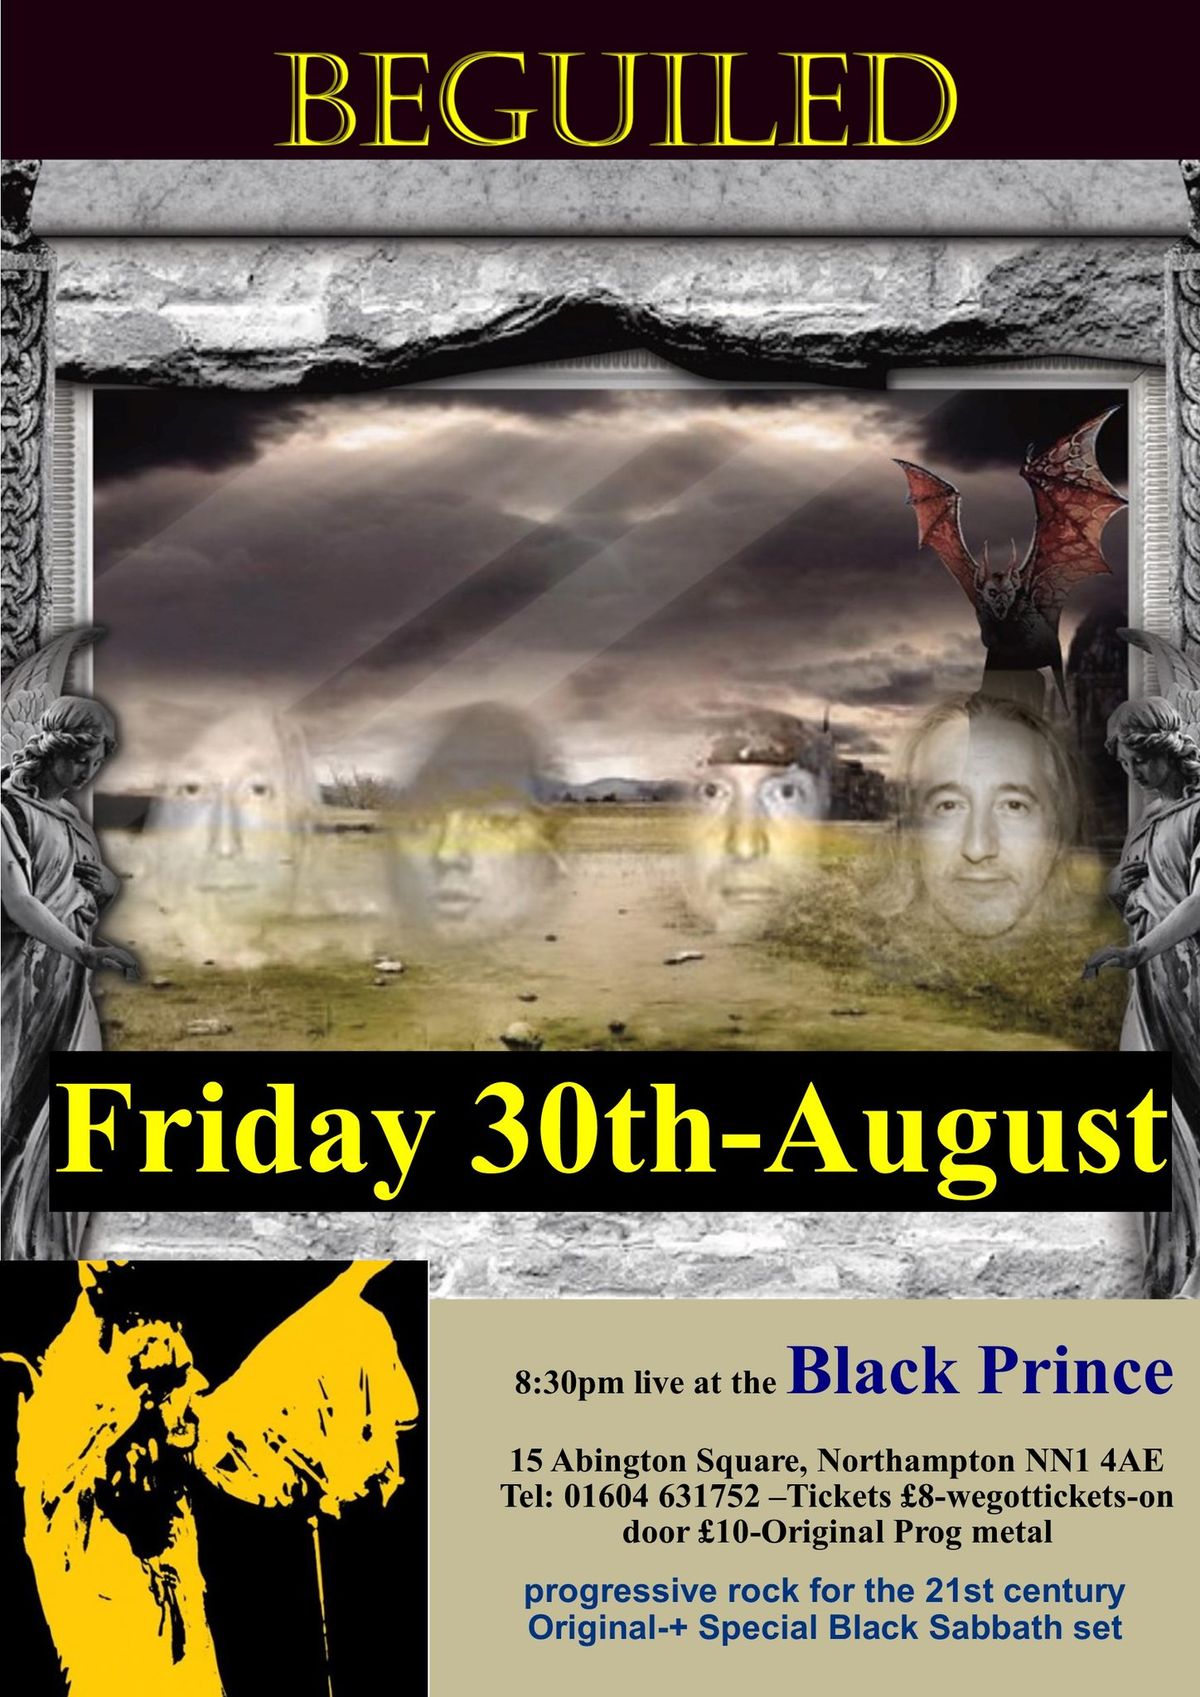 Beguiled play The Black Prince, Northampton